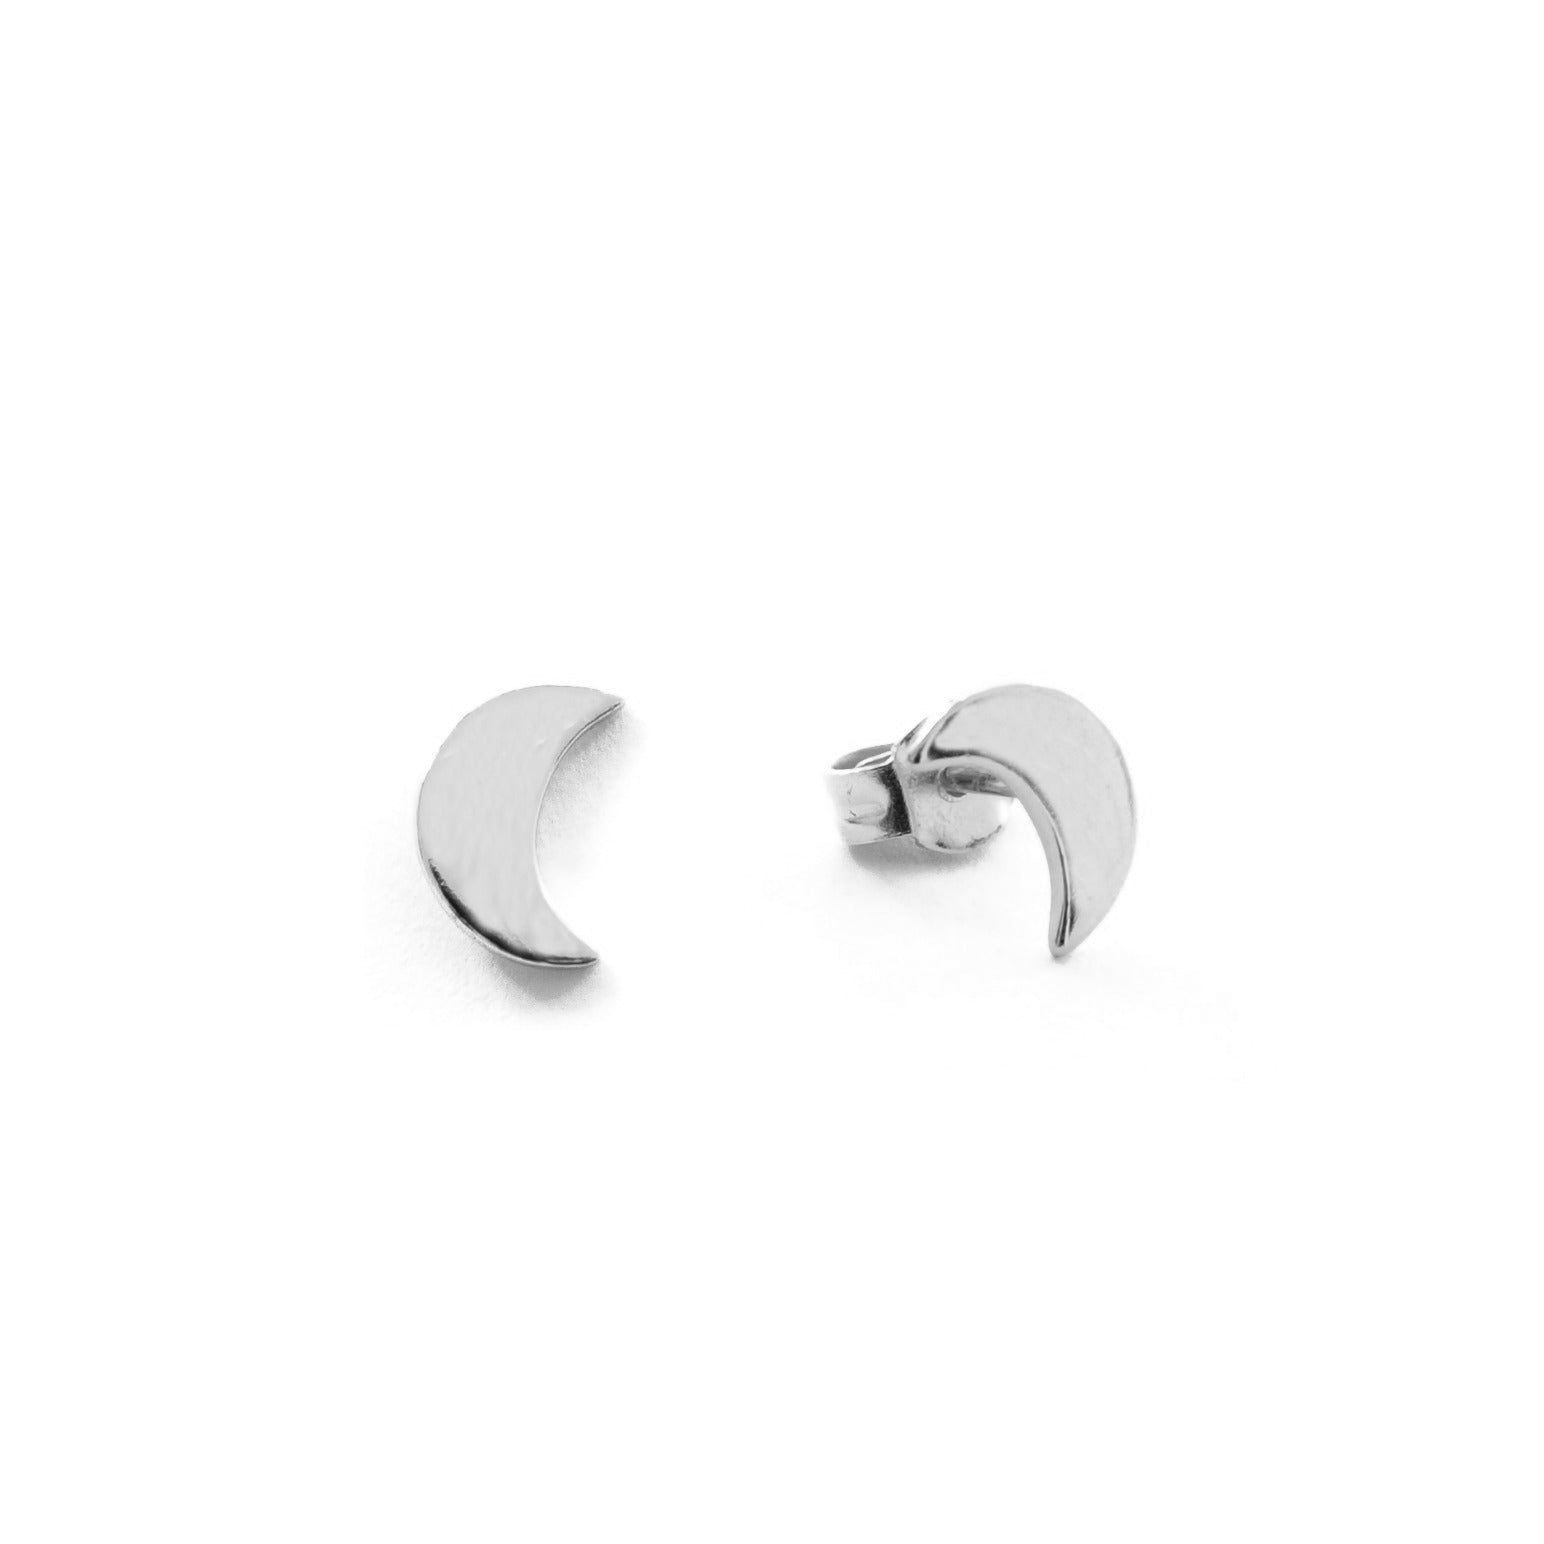 Moon earring silver - ByMirelae